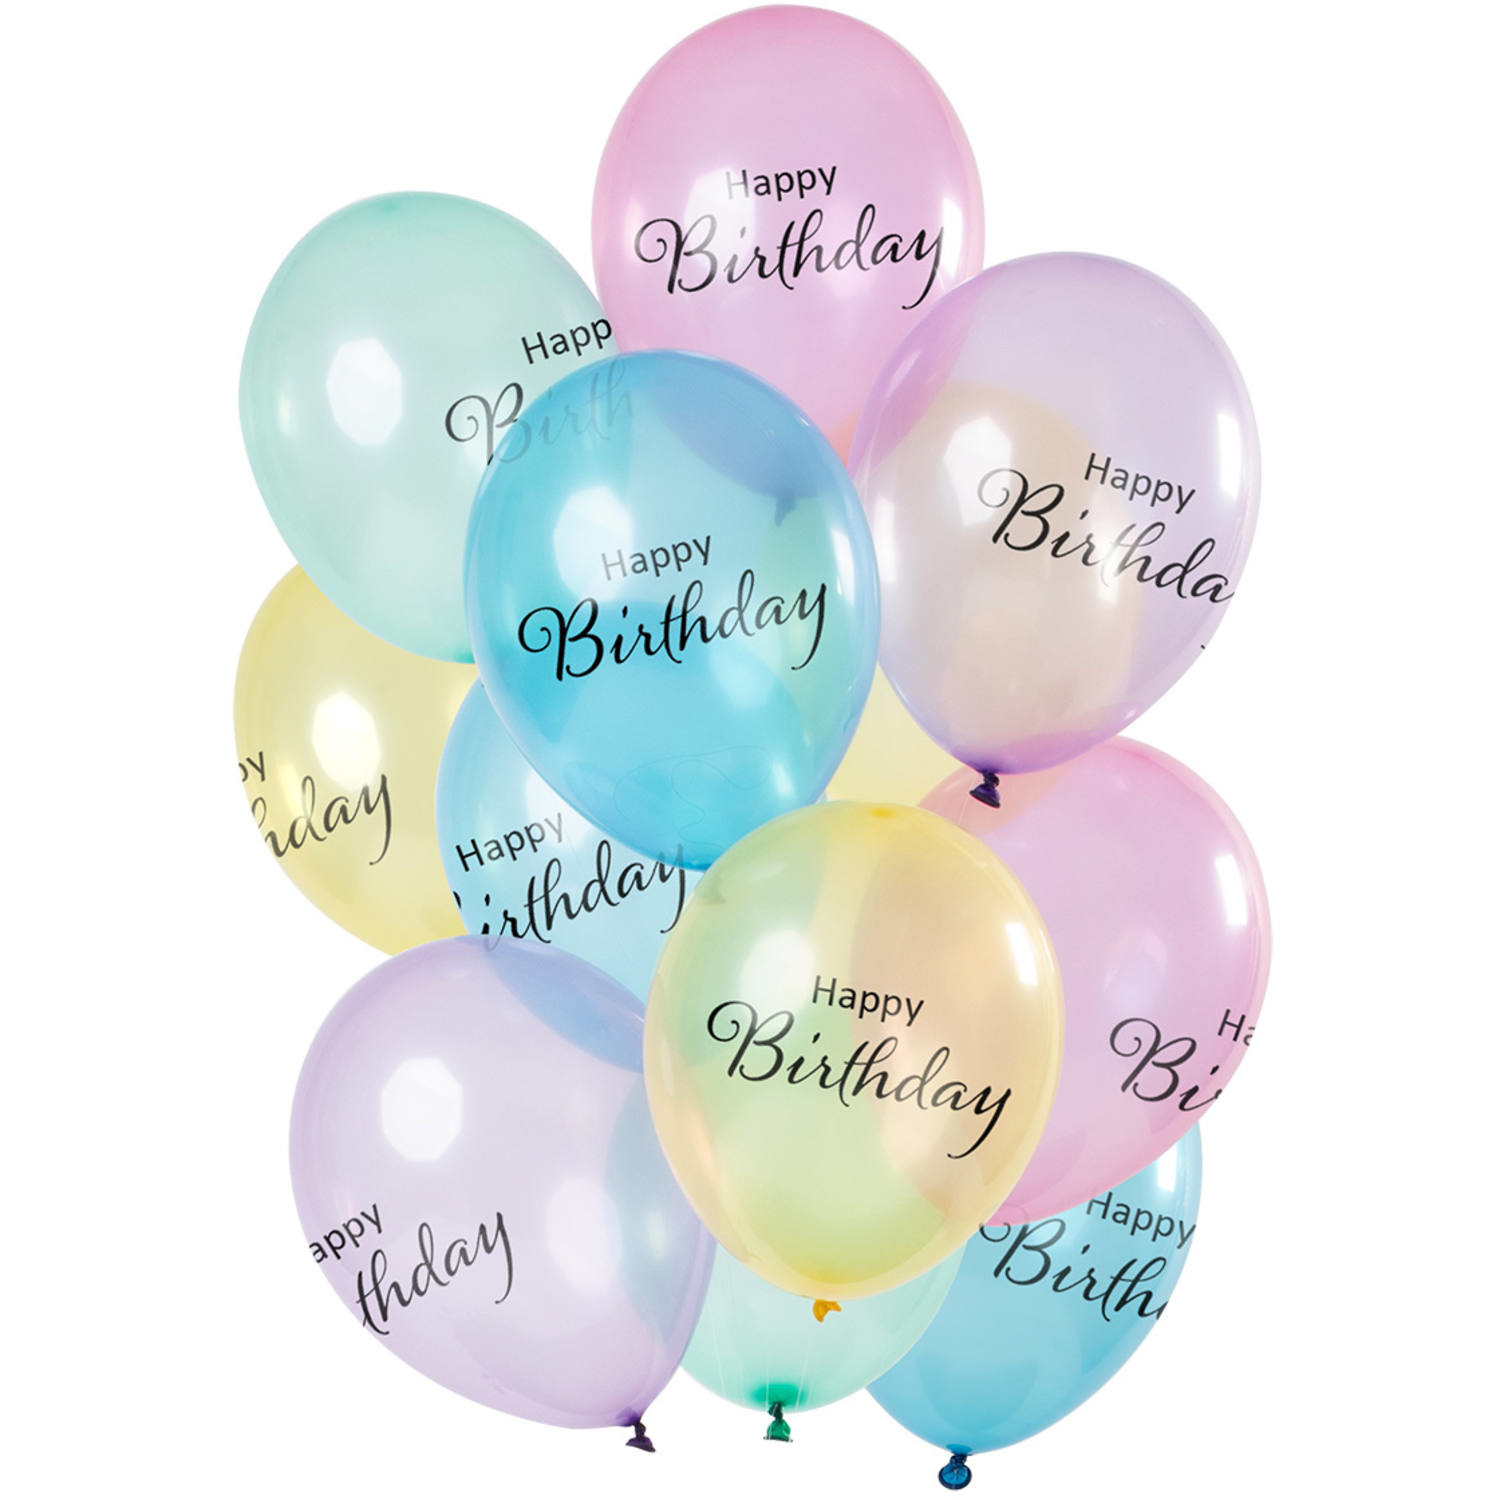 Maori Verwarren mobiel Happy Birthday Pastel Ballonnen Mix - 12stk - Feestperpost